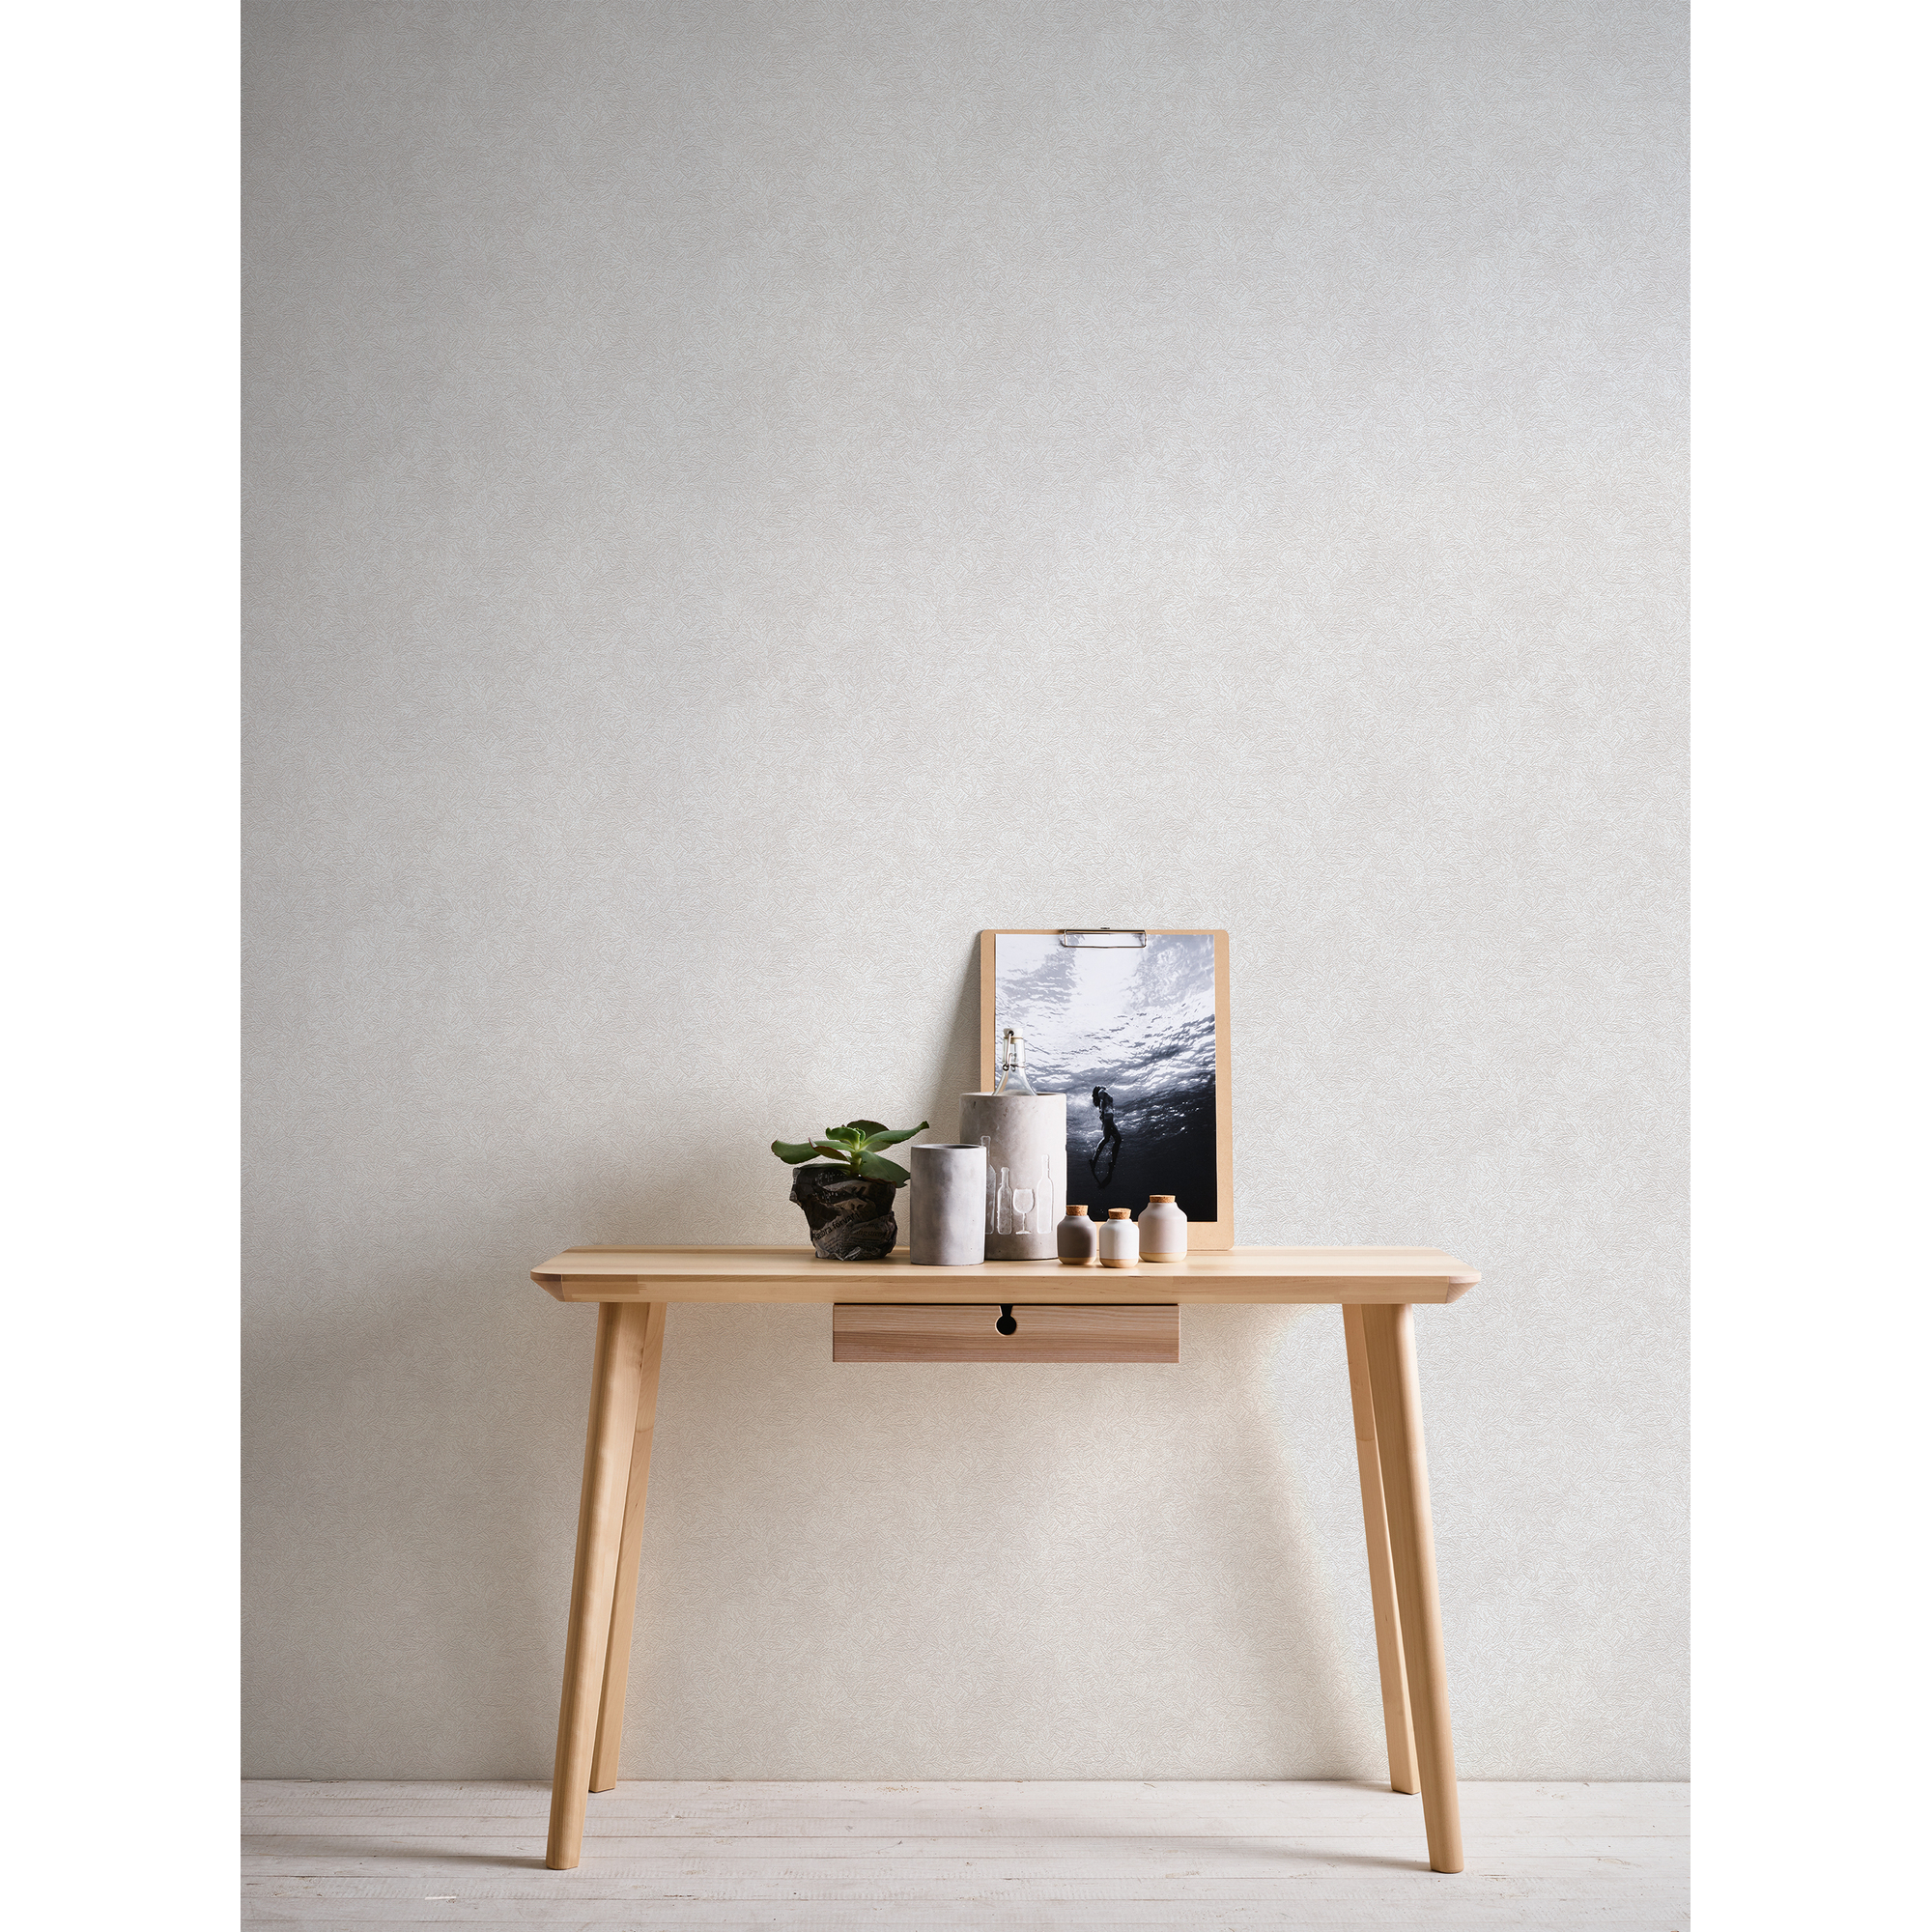 Vliestapete 'Attractive' Blätter beige 53 x 1005 cm + product picture